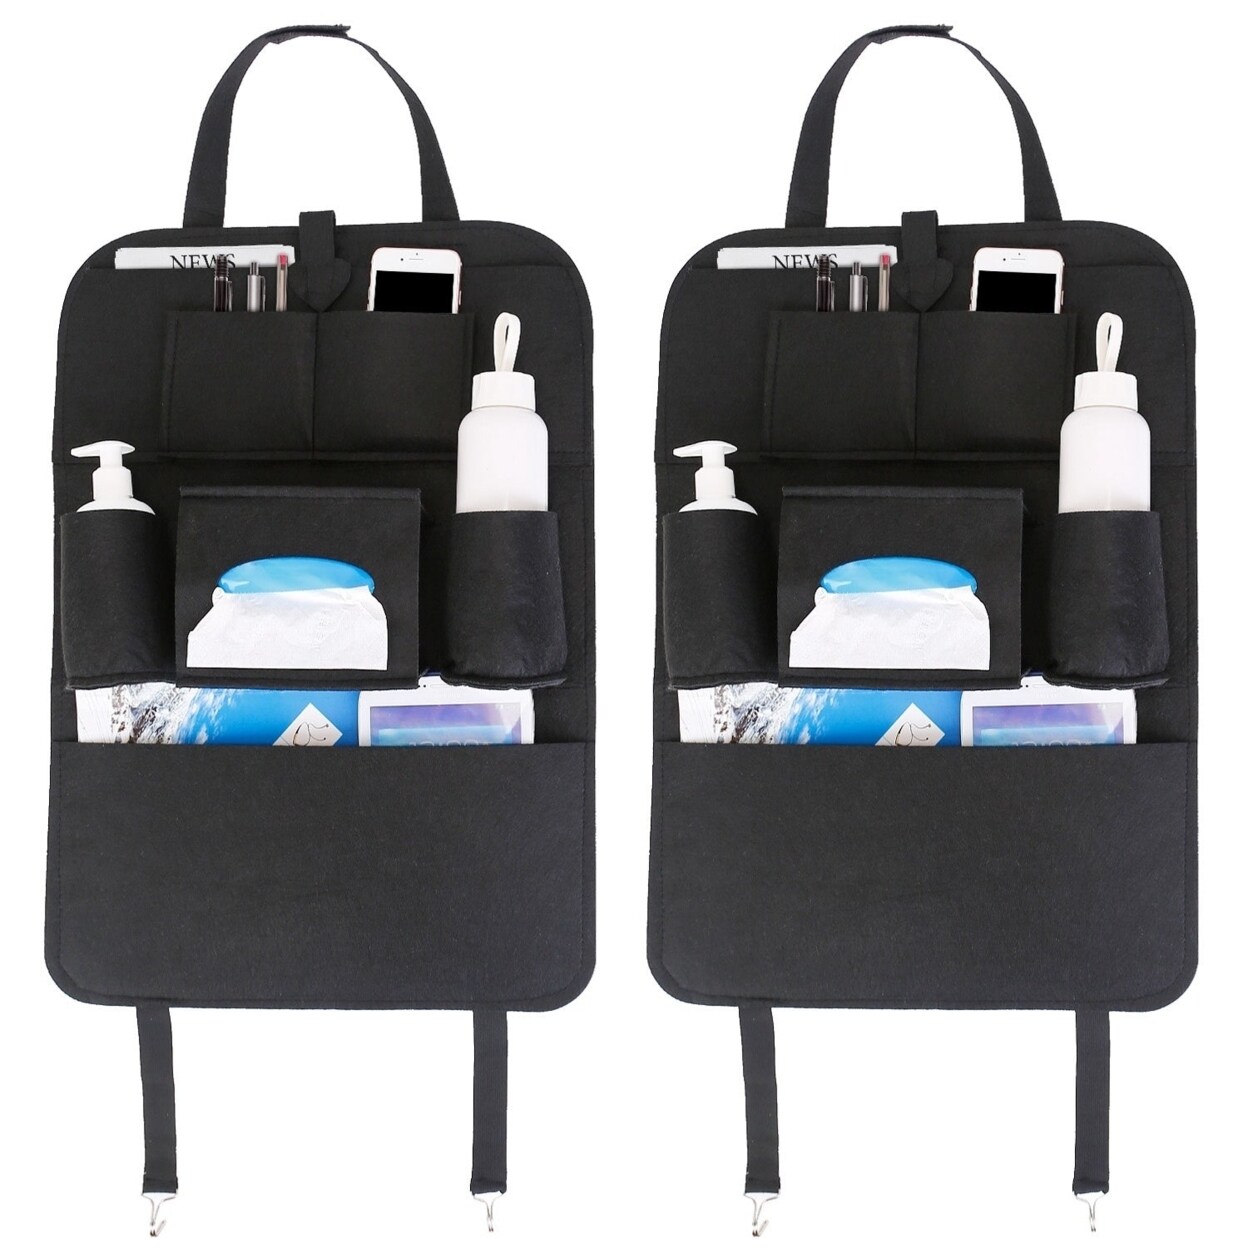 SKUSHOPS 2Pcs Car Backseat Organizer Multi-pocket Car Storage Bag with 7 Pockets For Toys Snacks Drinks Pill Boxes Books